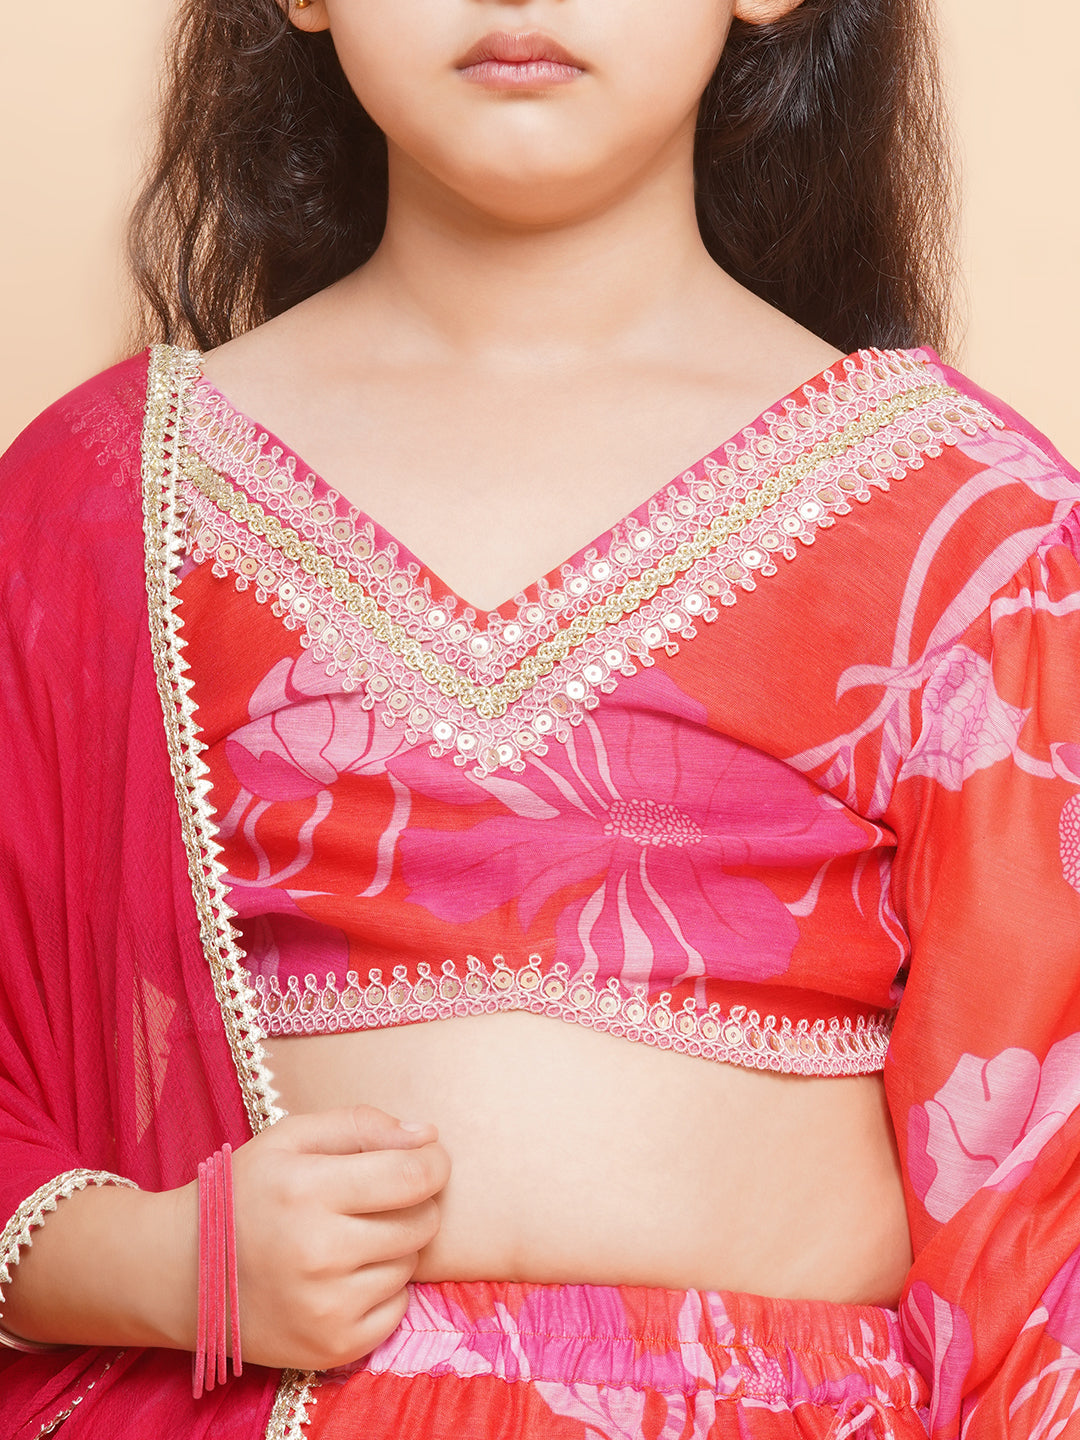 Bitiya by Bhama Girls Red & Pink Digital Flower Print Lace work Choli Lehenga with Dupatta